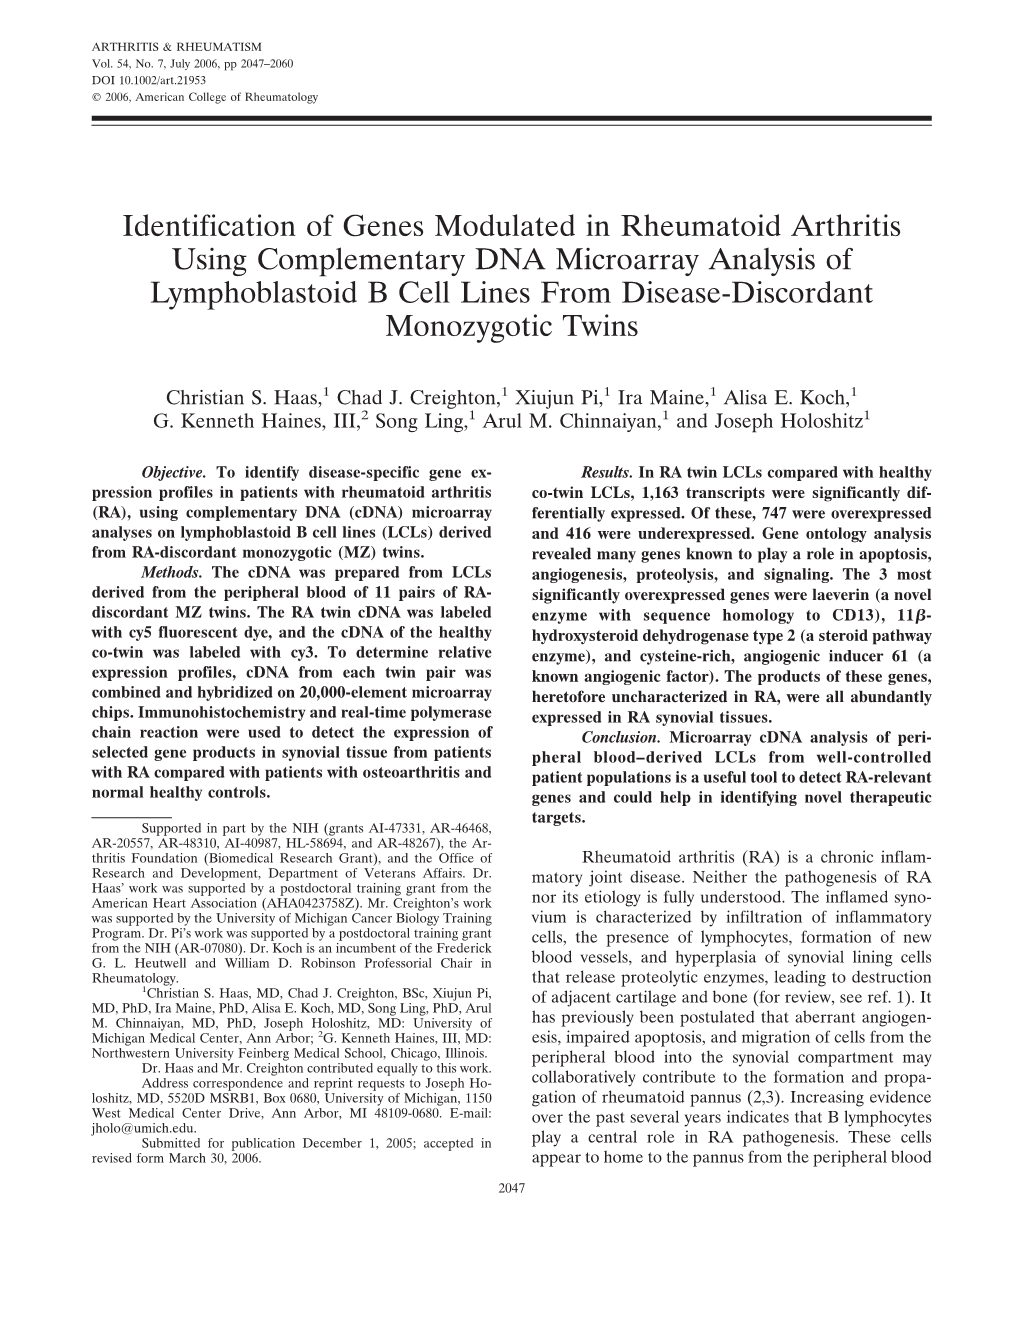 Identification of Genes Modulated in Rheumatoid Arthritis Using